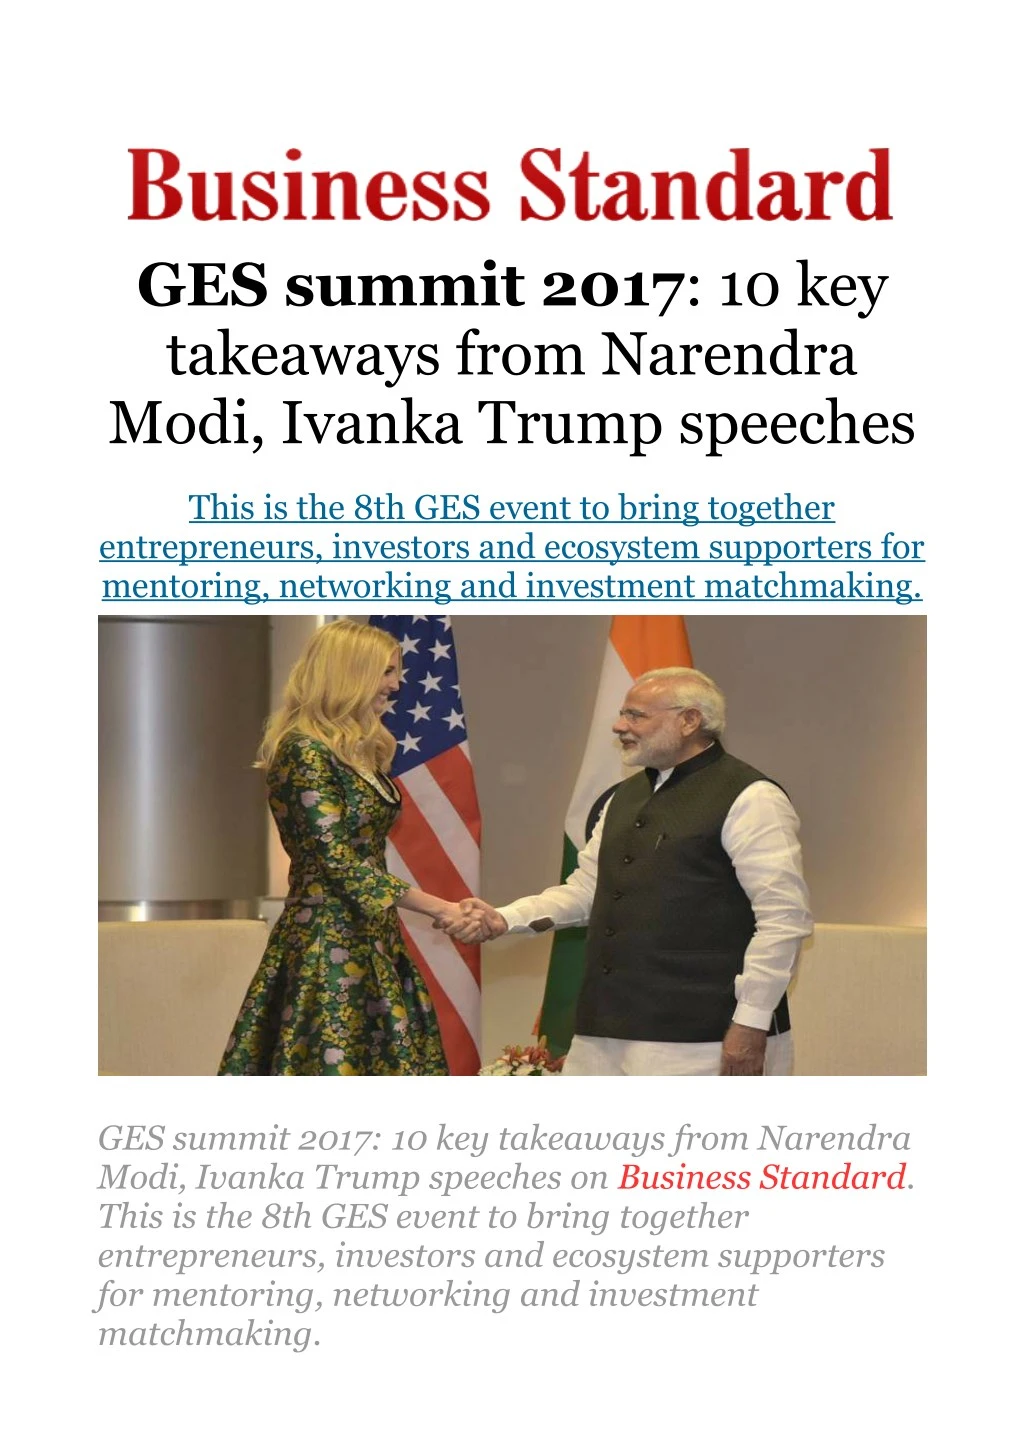 ges summit 2017 10 key takeaways from narendra